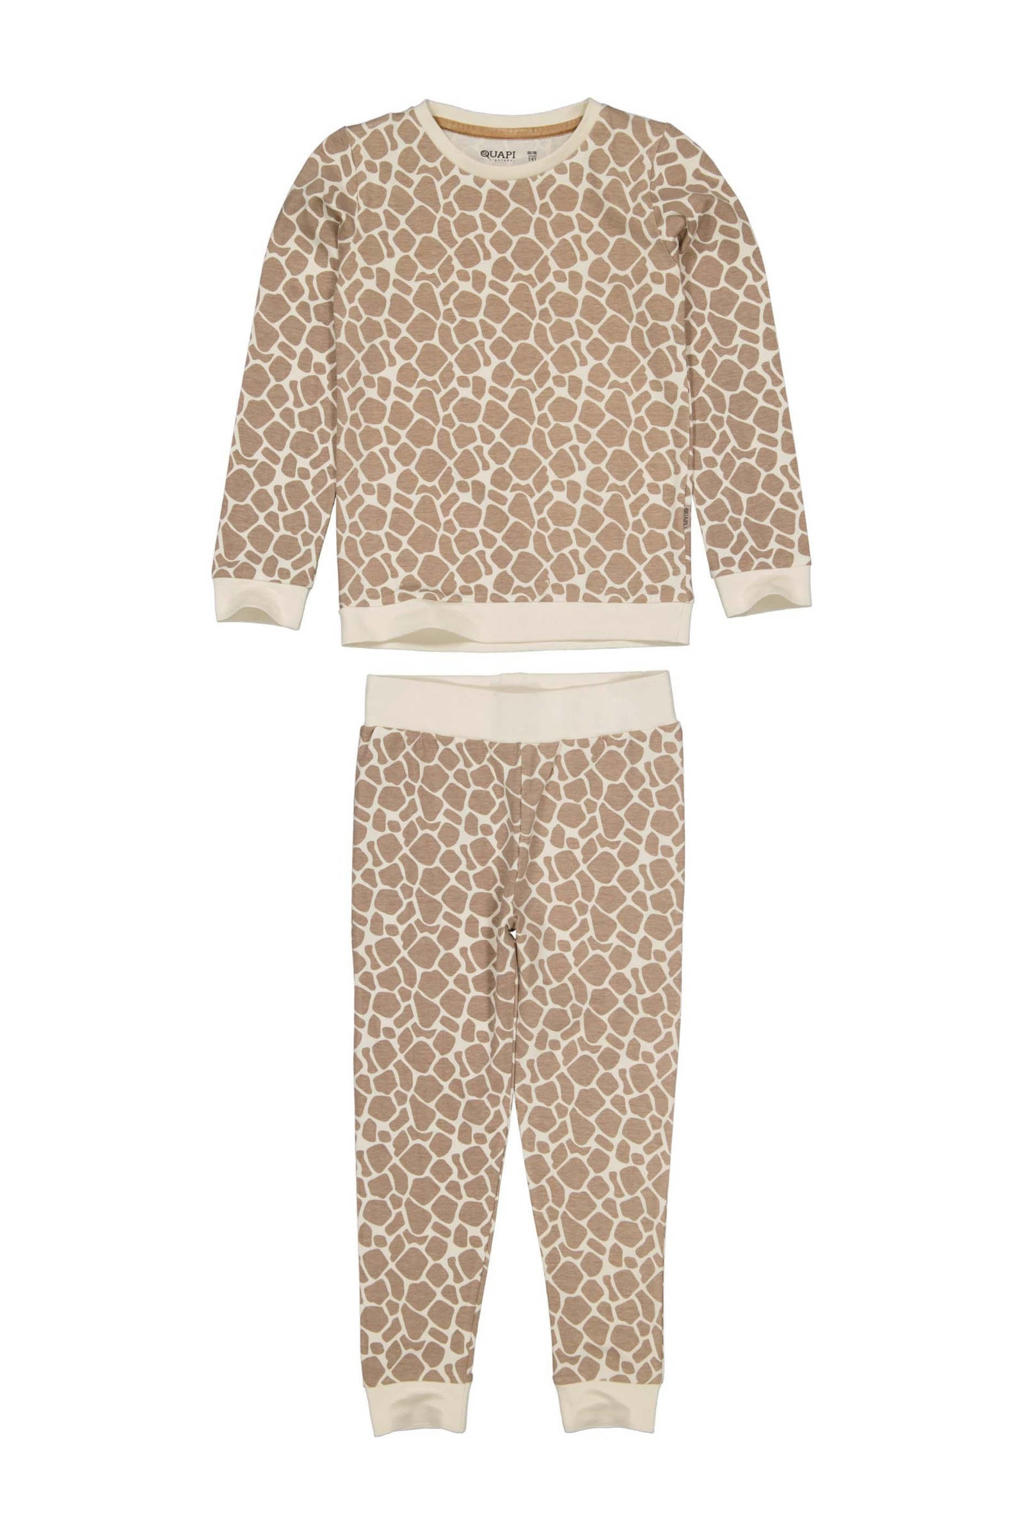 Quapi   pyjama PUCK met dierenprint ecru/zand